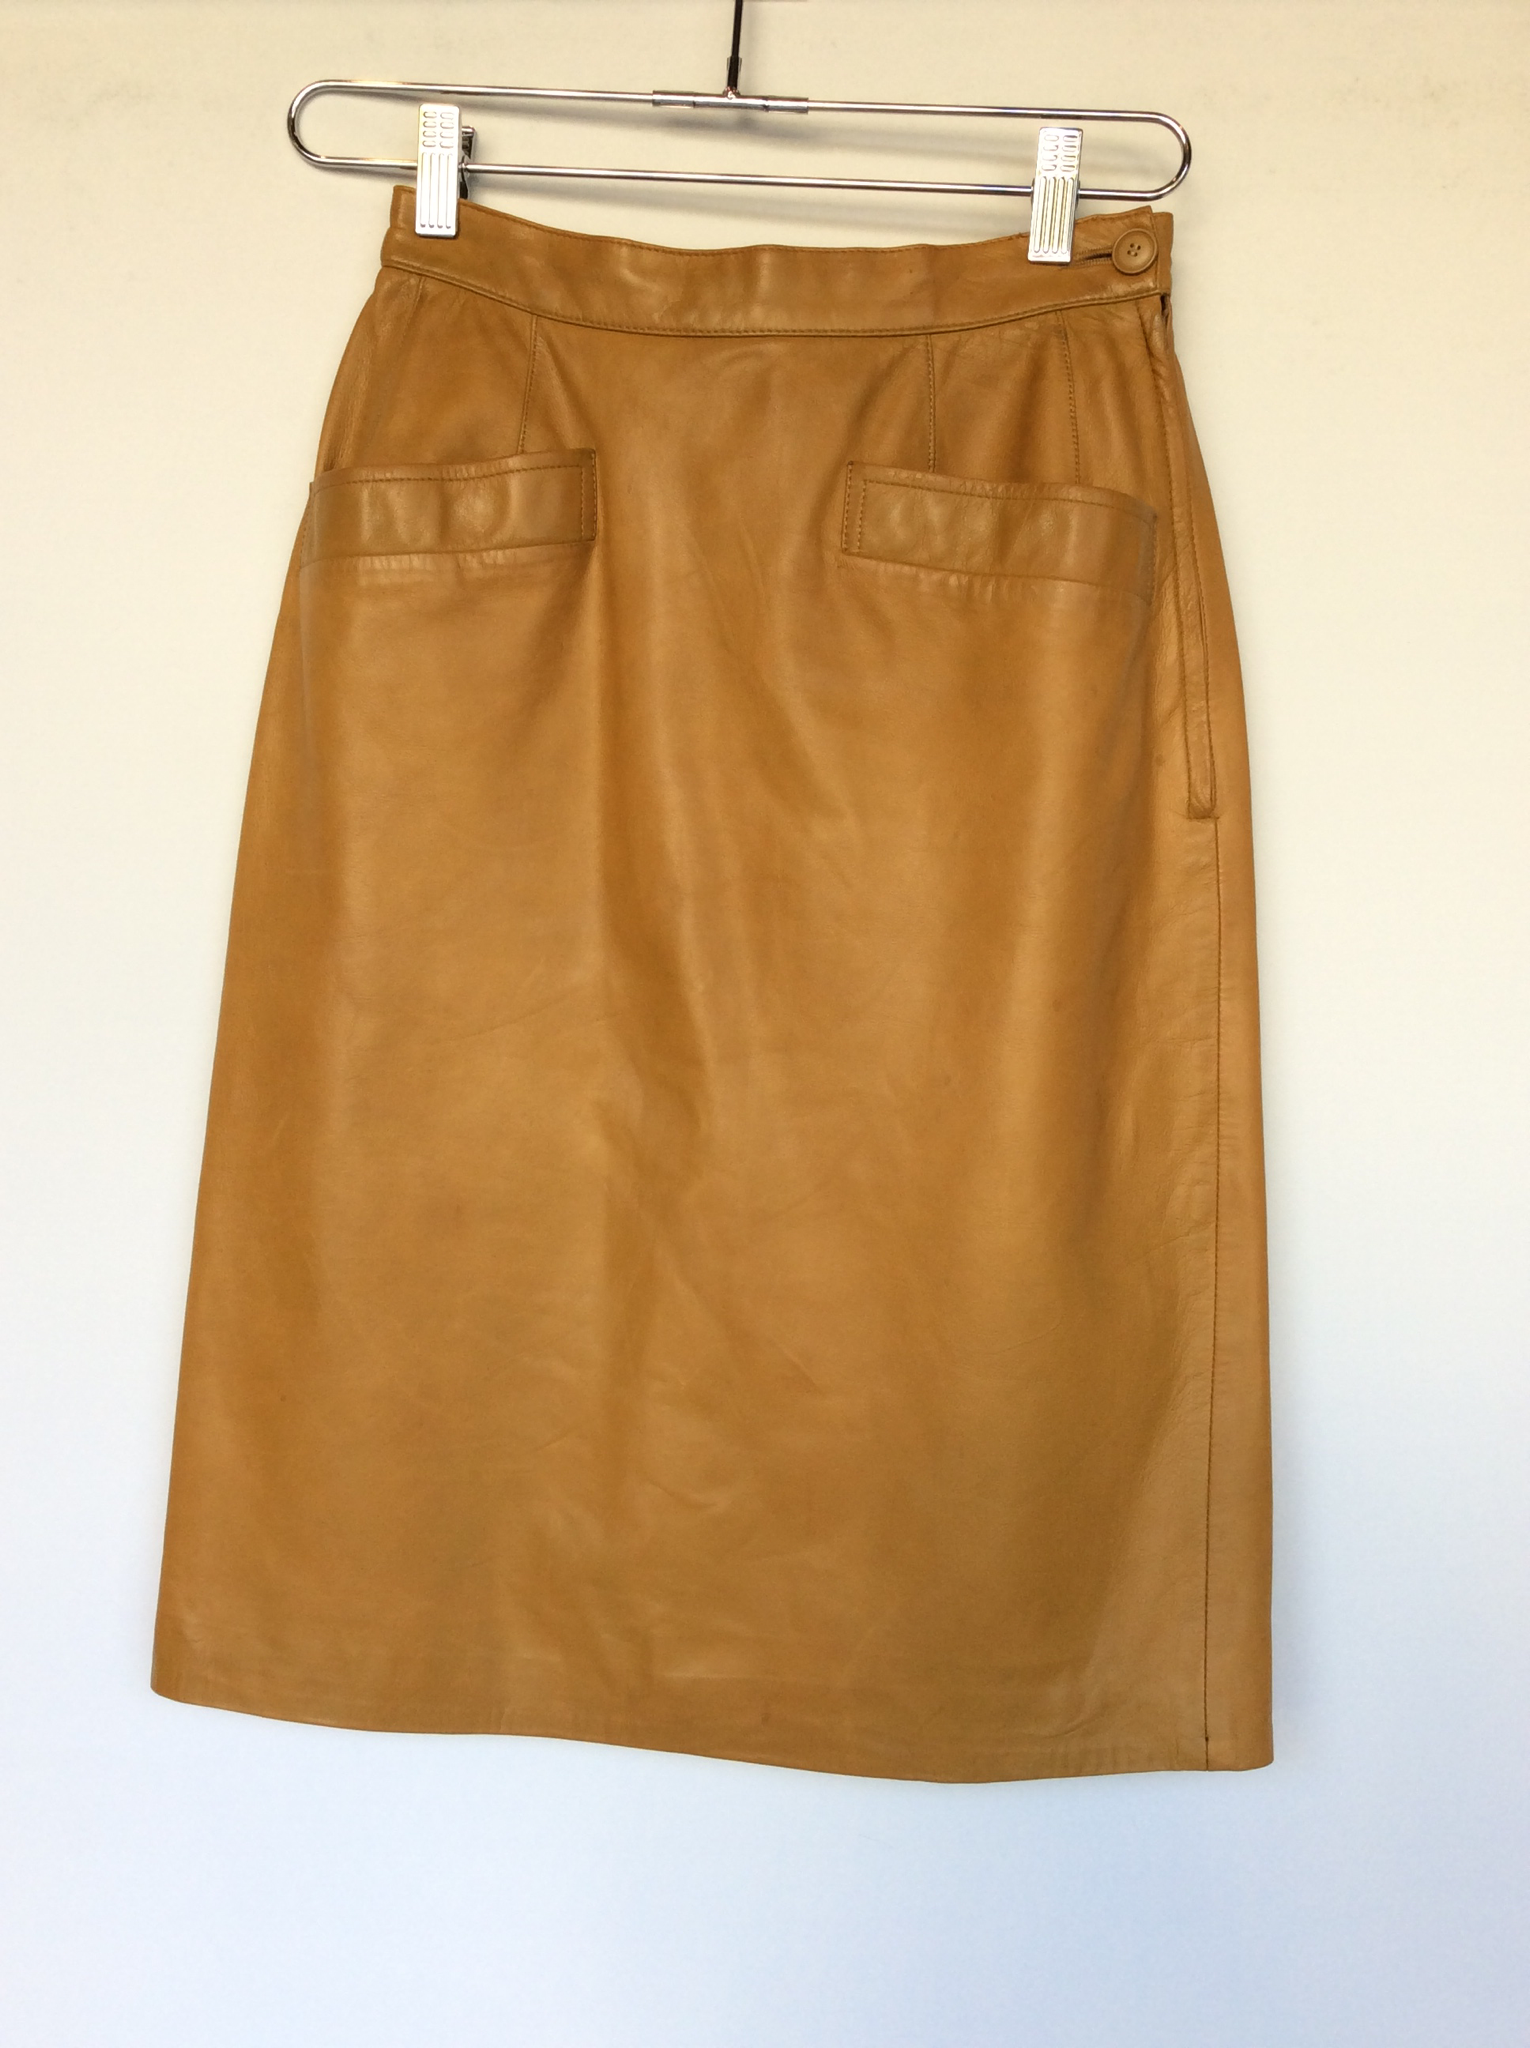 Ysl leather skirt